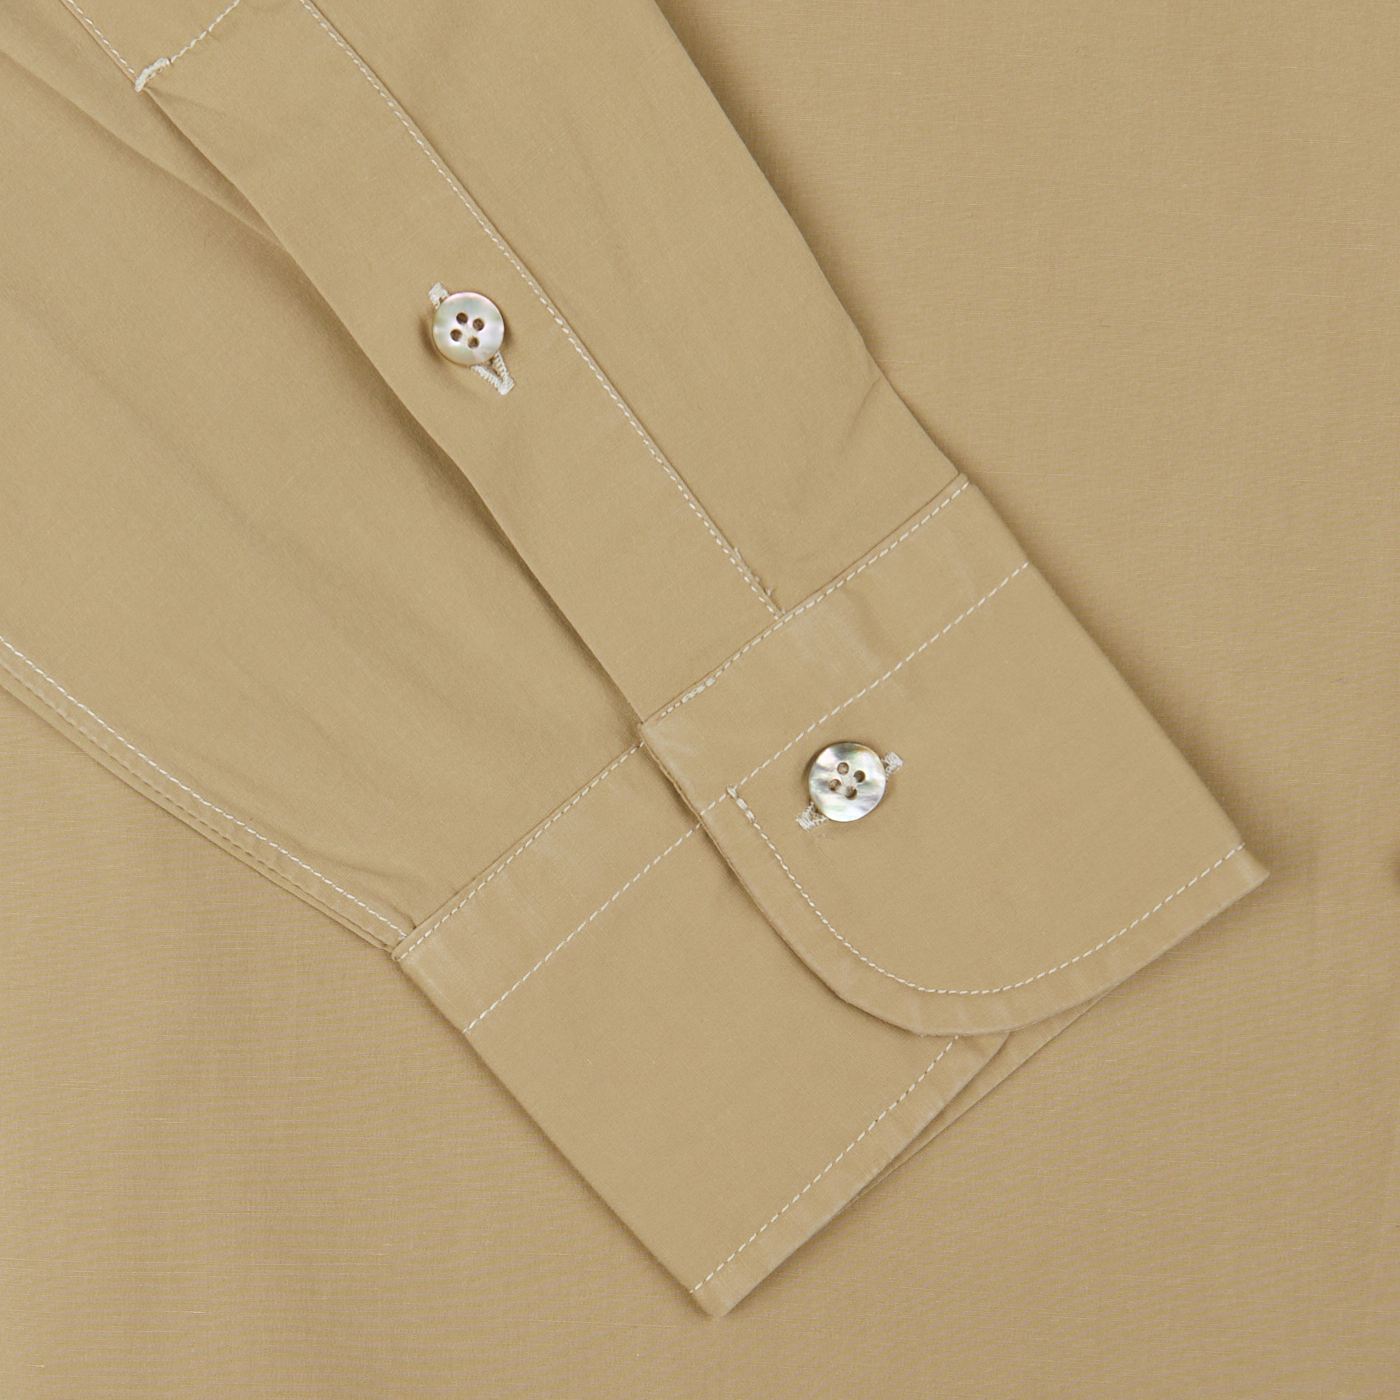 Khaki Beige Cotton Gabardine Regular Fit Shirt sleeve with decorative skull buttons on a matching background, crafted by Italian shirtmaker Mazzarelli.